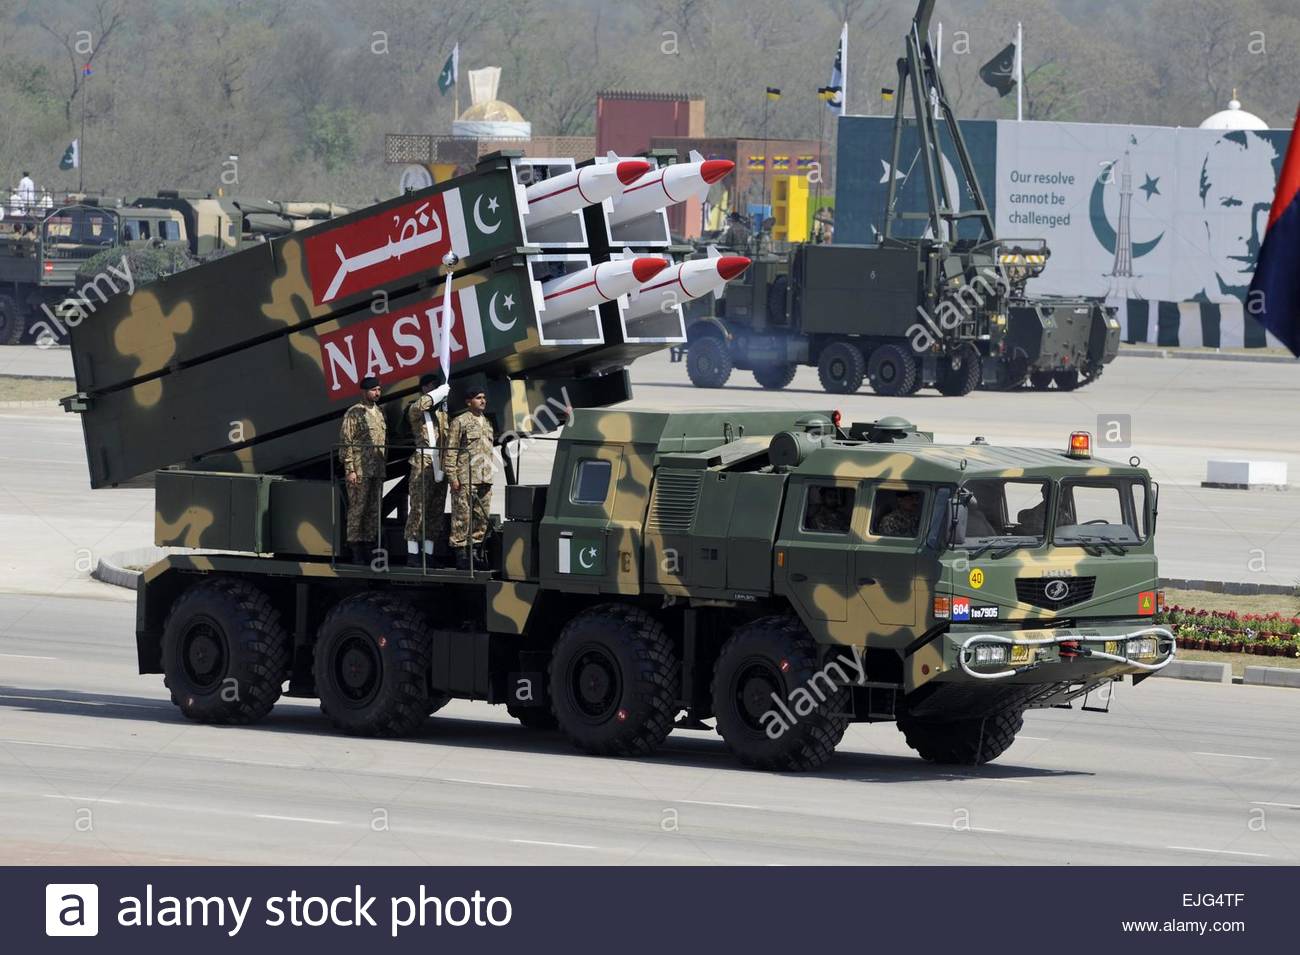 epa04675966-a-pakistani-developed-nasr-missile-system-passes-during-EJG4TF.jpg